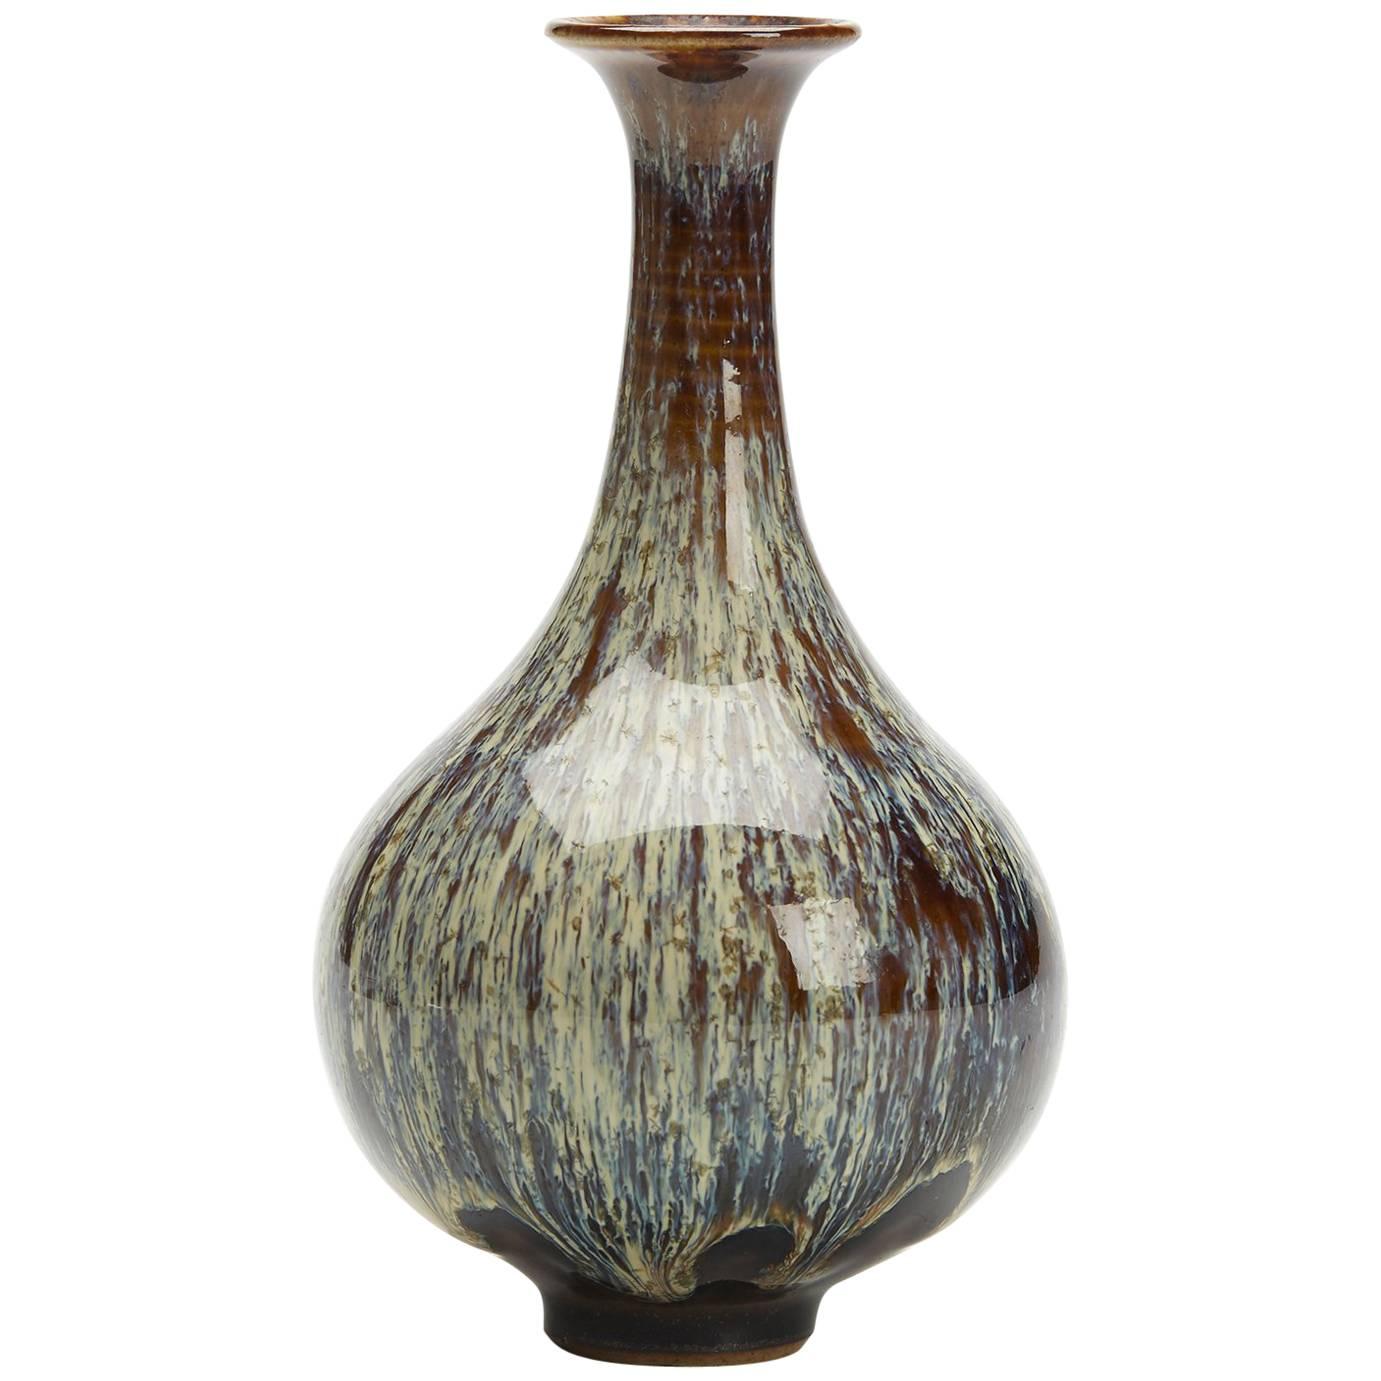 Antique Chinese Junyao Streak Glazed Bottle Vase 19th-20th Century